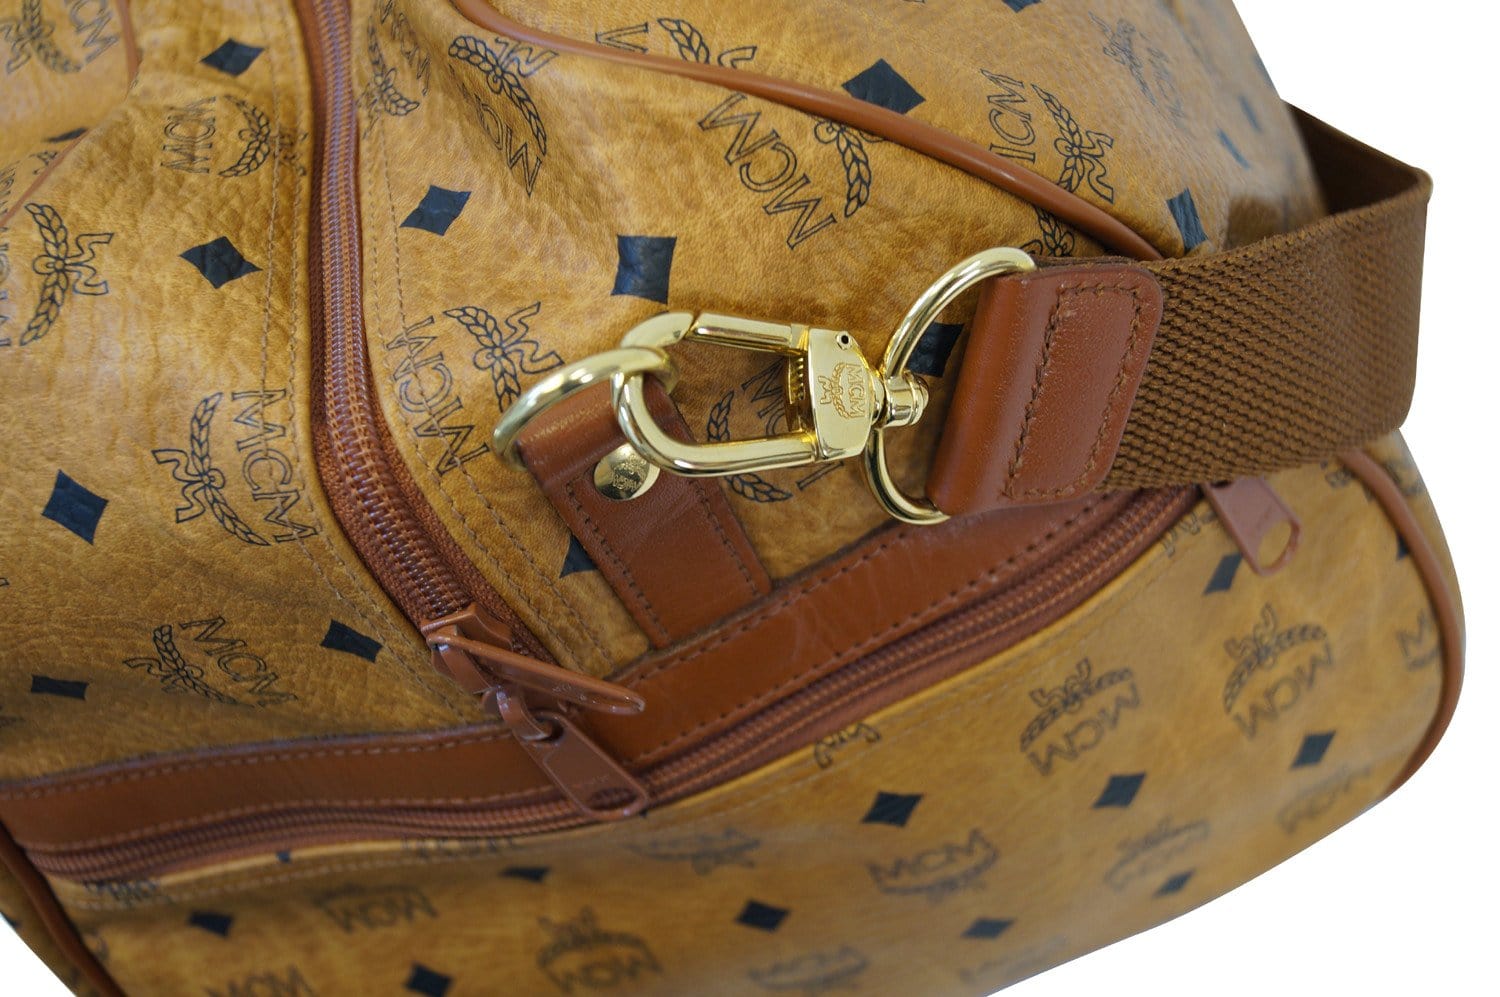 Boston leather handbag MCM Multicolour in Leather - 21236074